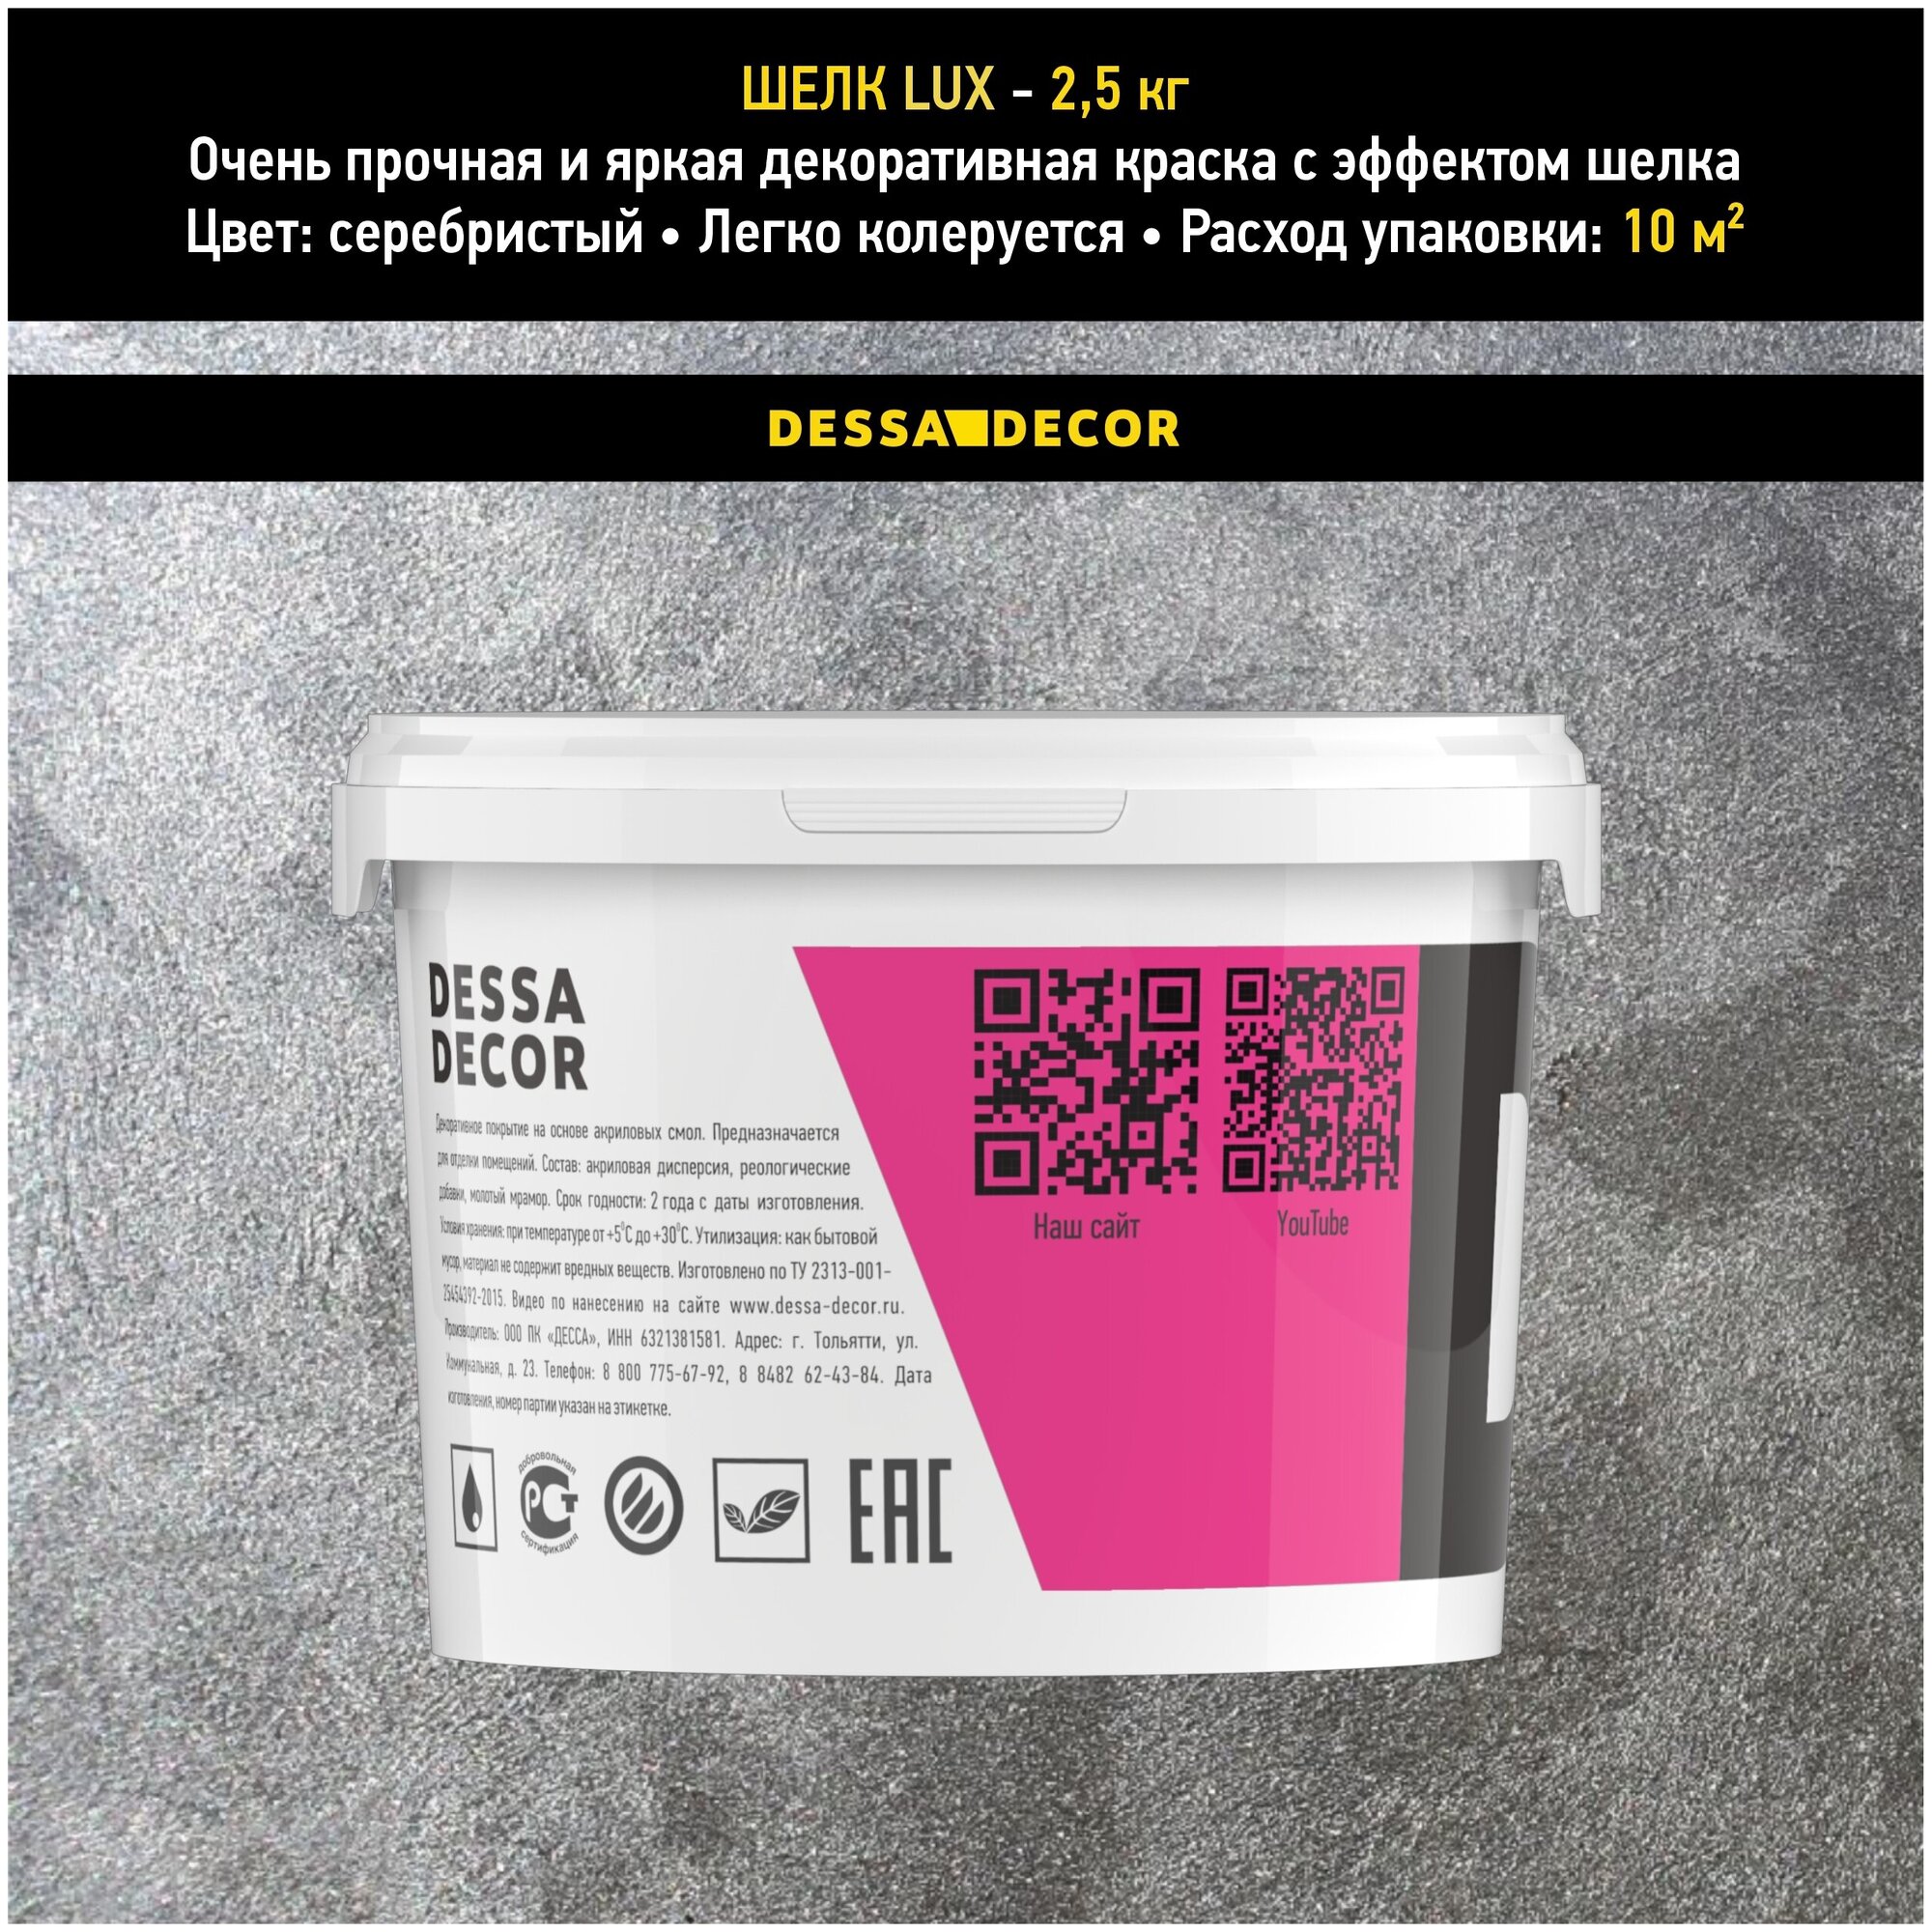 Декоративная краска для стен DESSA DECOR Шелк Lux 2,5 кг, перламутровая декоративная штукатурка для стен для имитации мокрого шелка